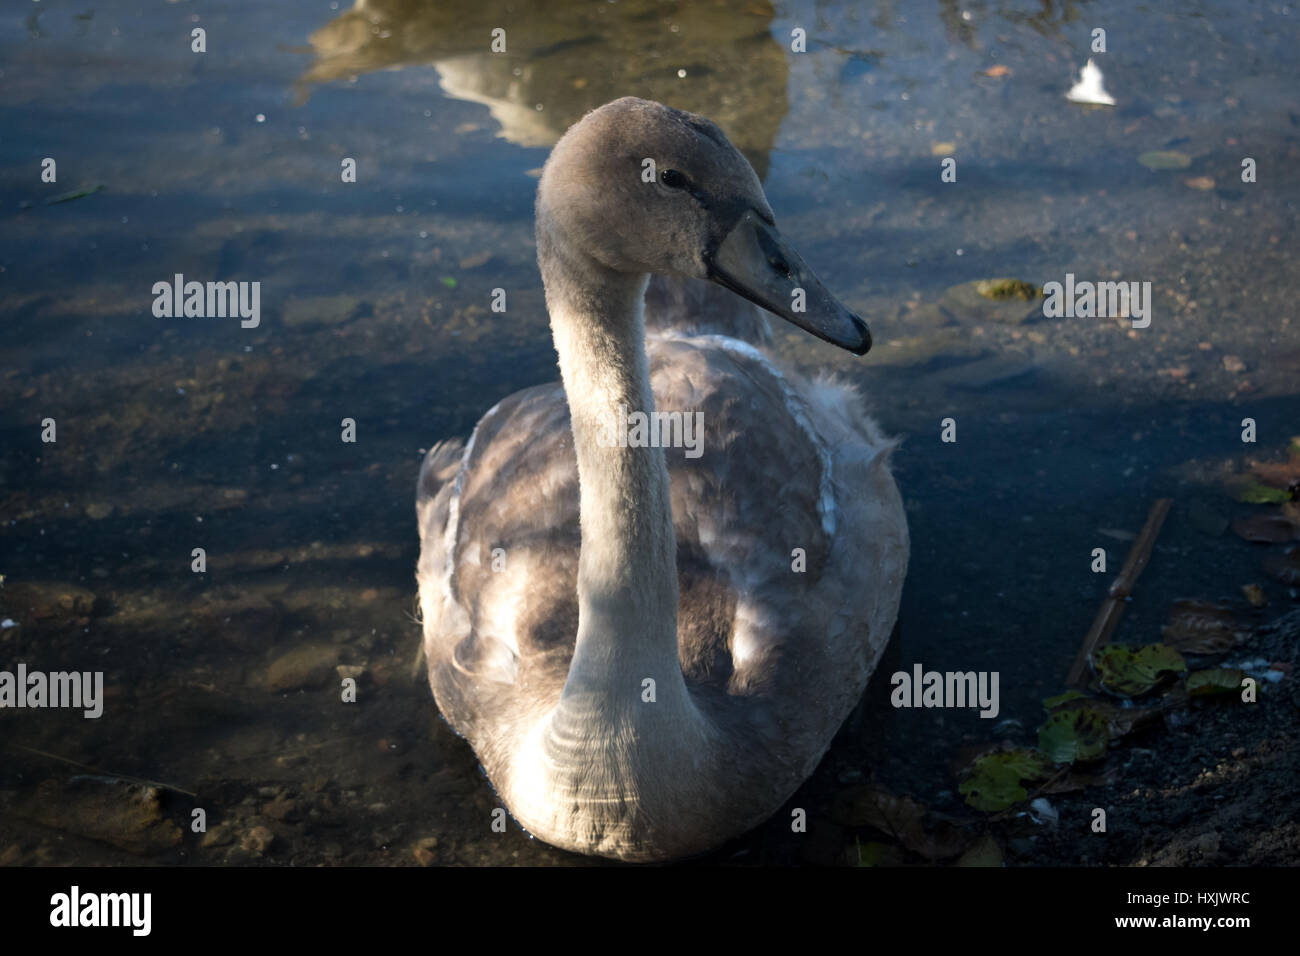 Baby swan closeup Stock Photo